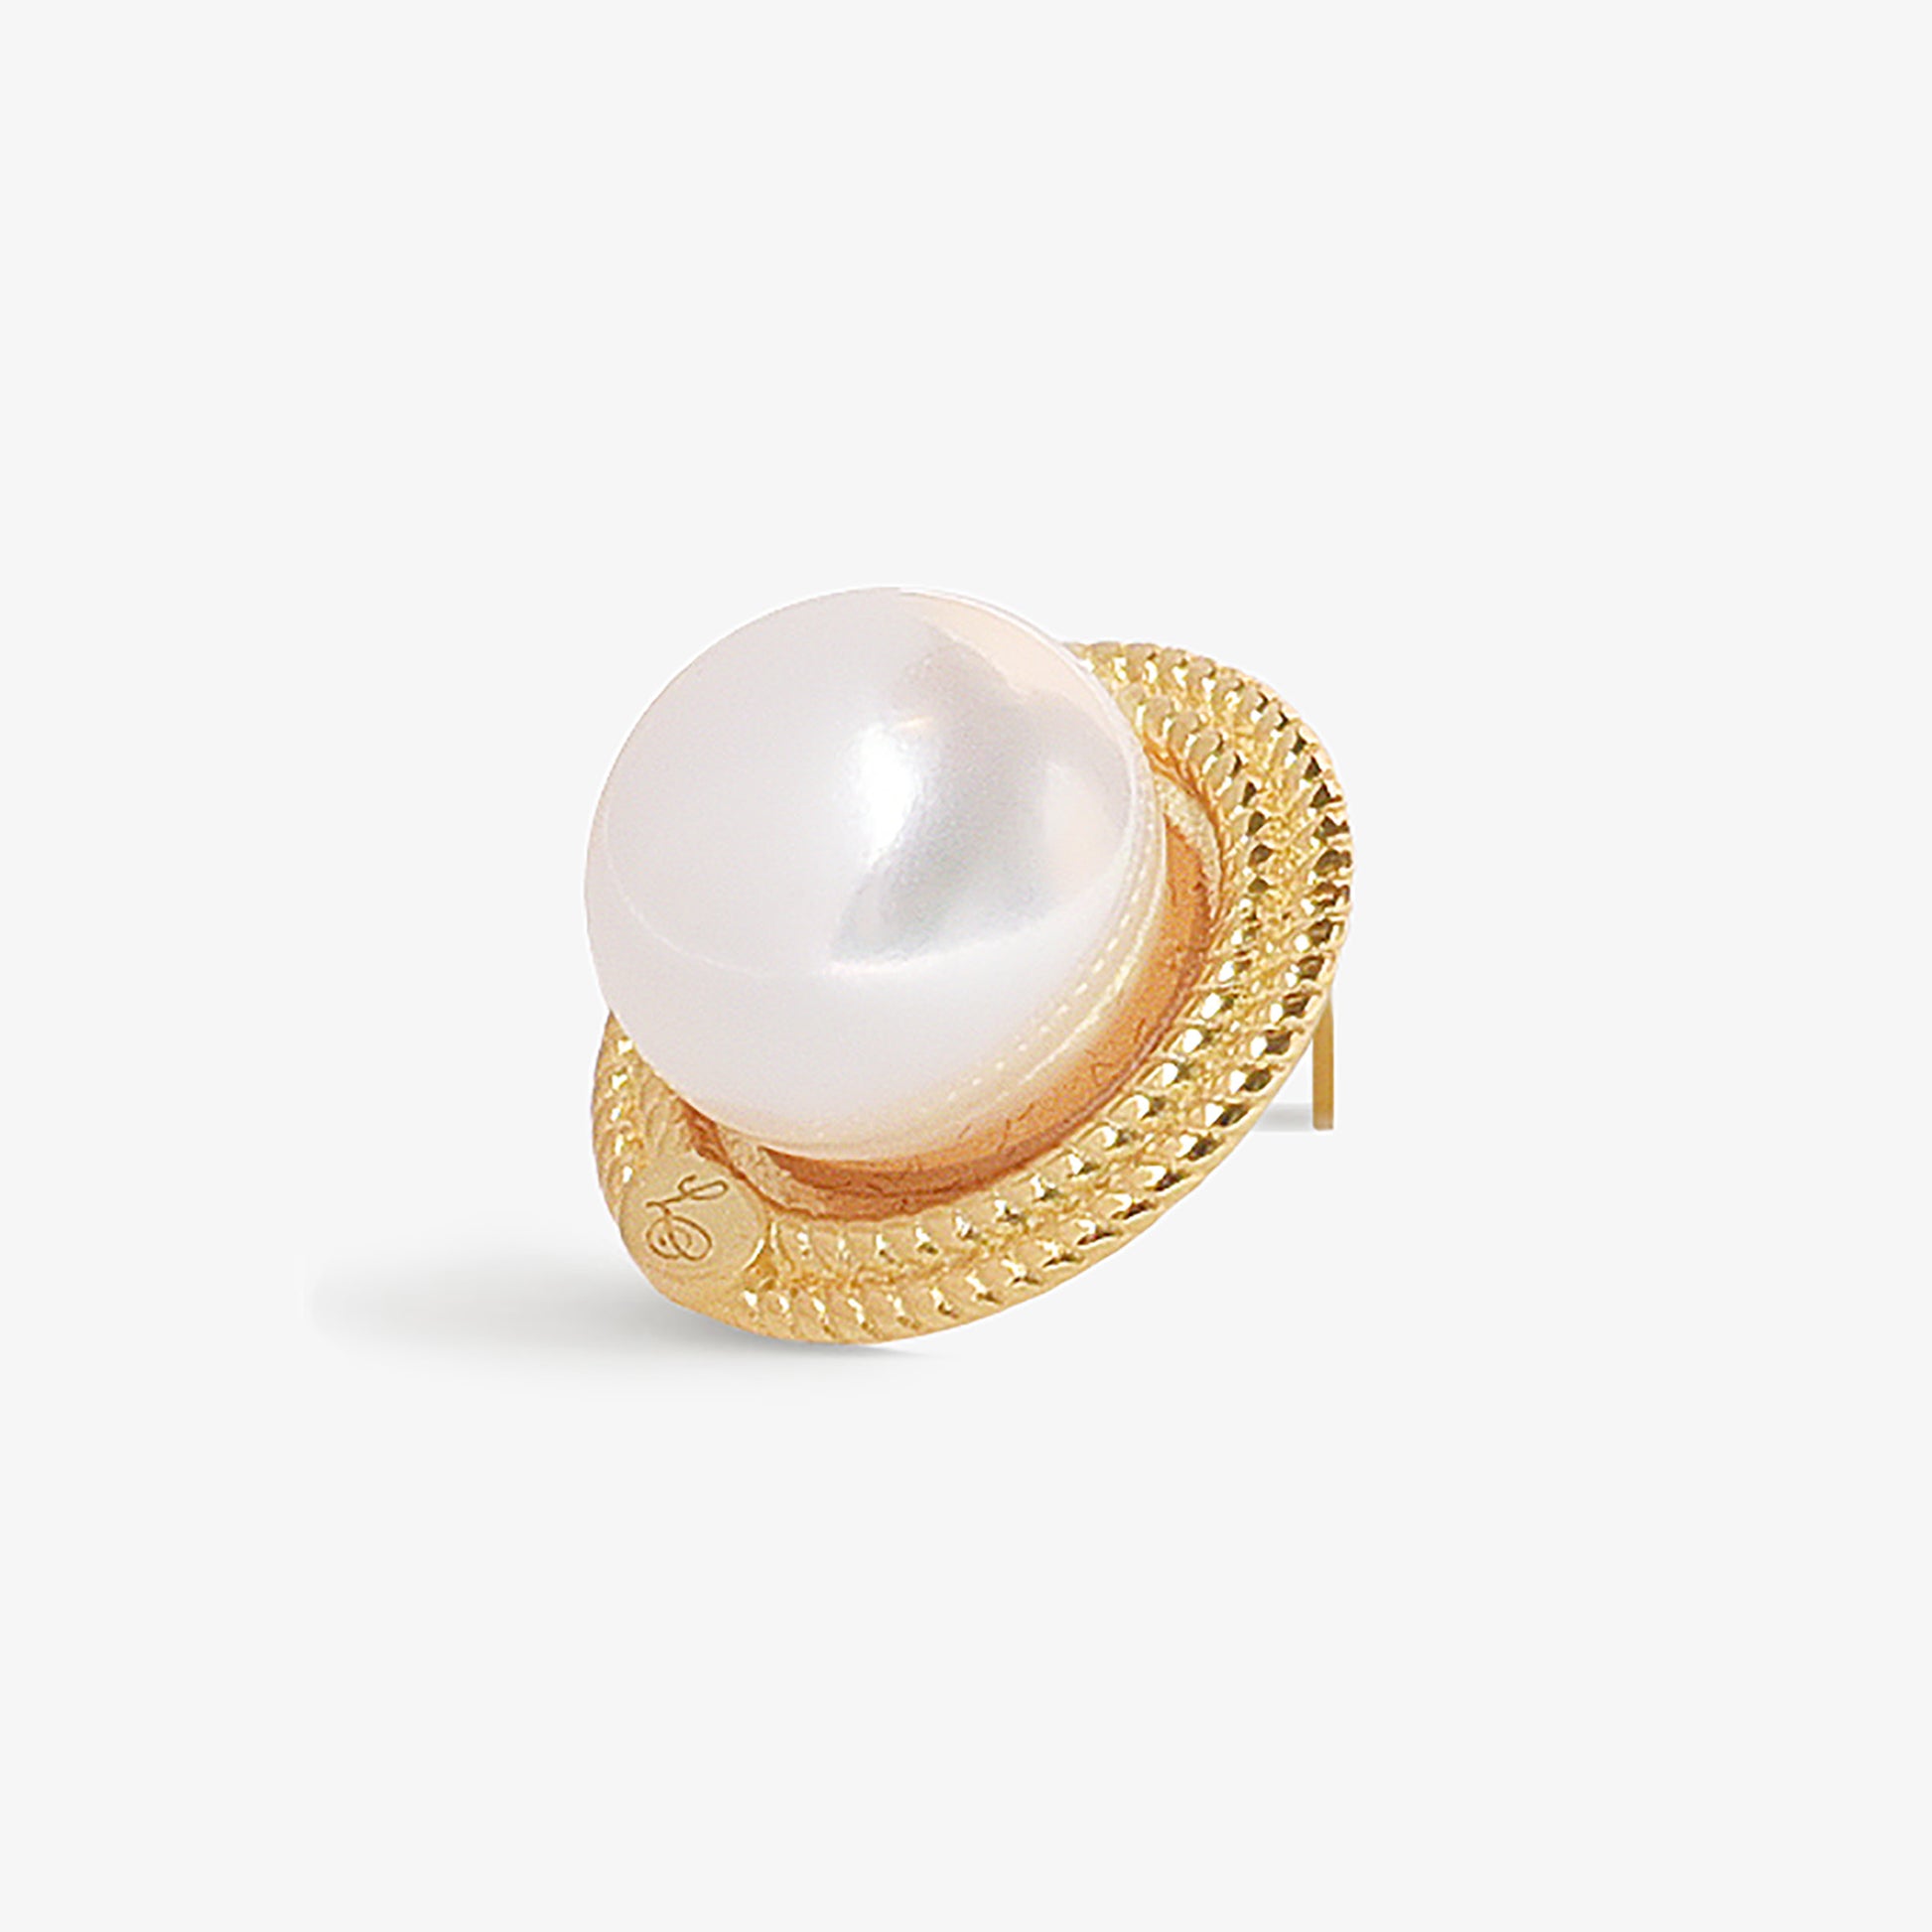 lottie pearl earrings, pearl stud earrings with gold braided rim, classic style, vintage pearl earrings, statement earrings